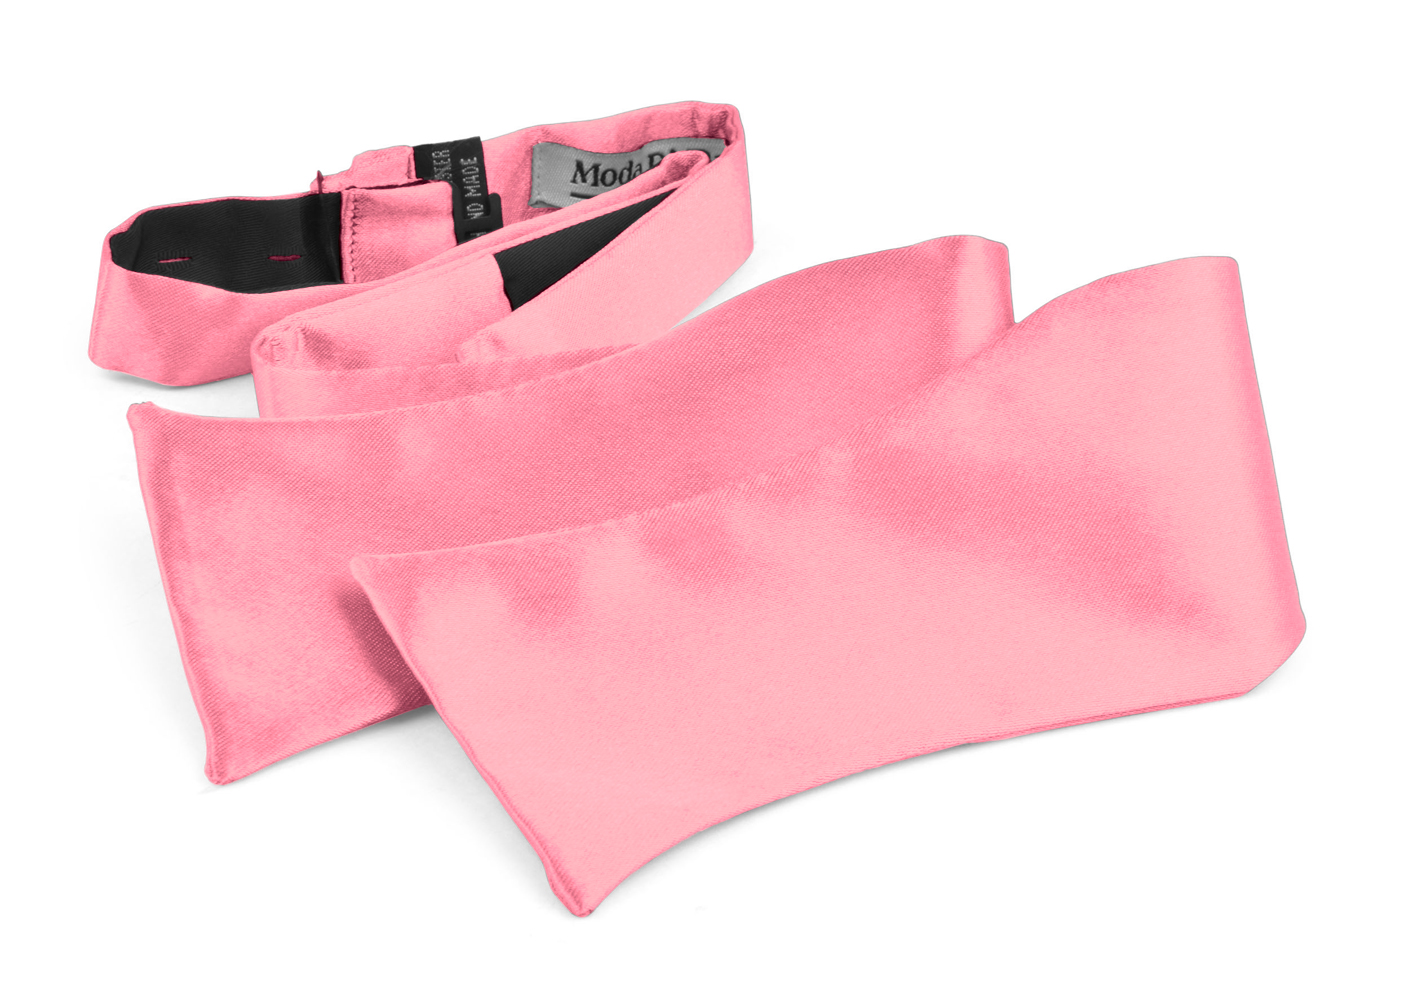 Bow Ties For Men's Adjustable Self Tied Gift Box Moda Di Raza - Carnation Pink 